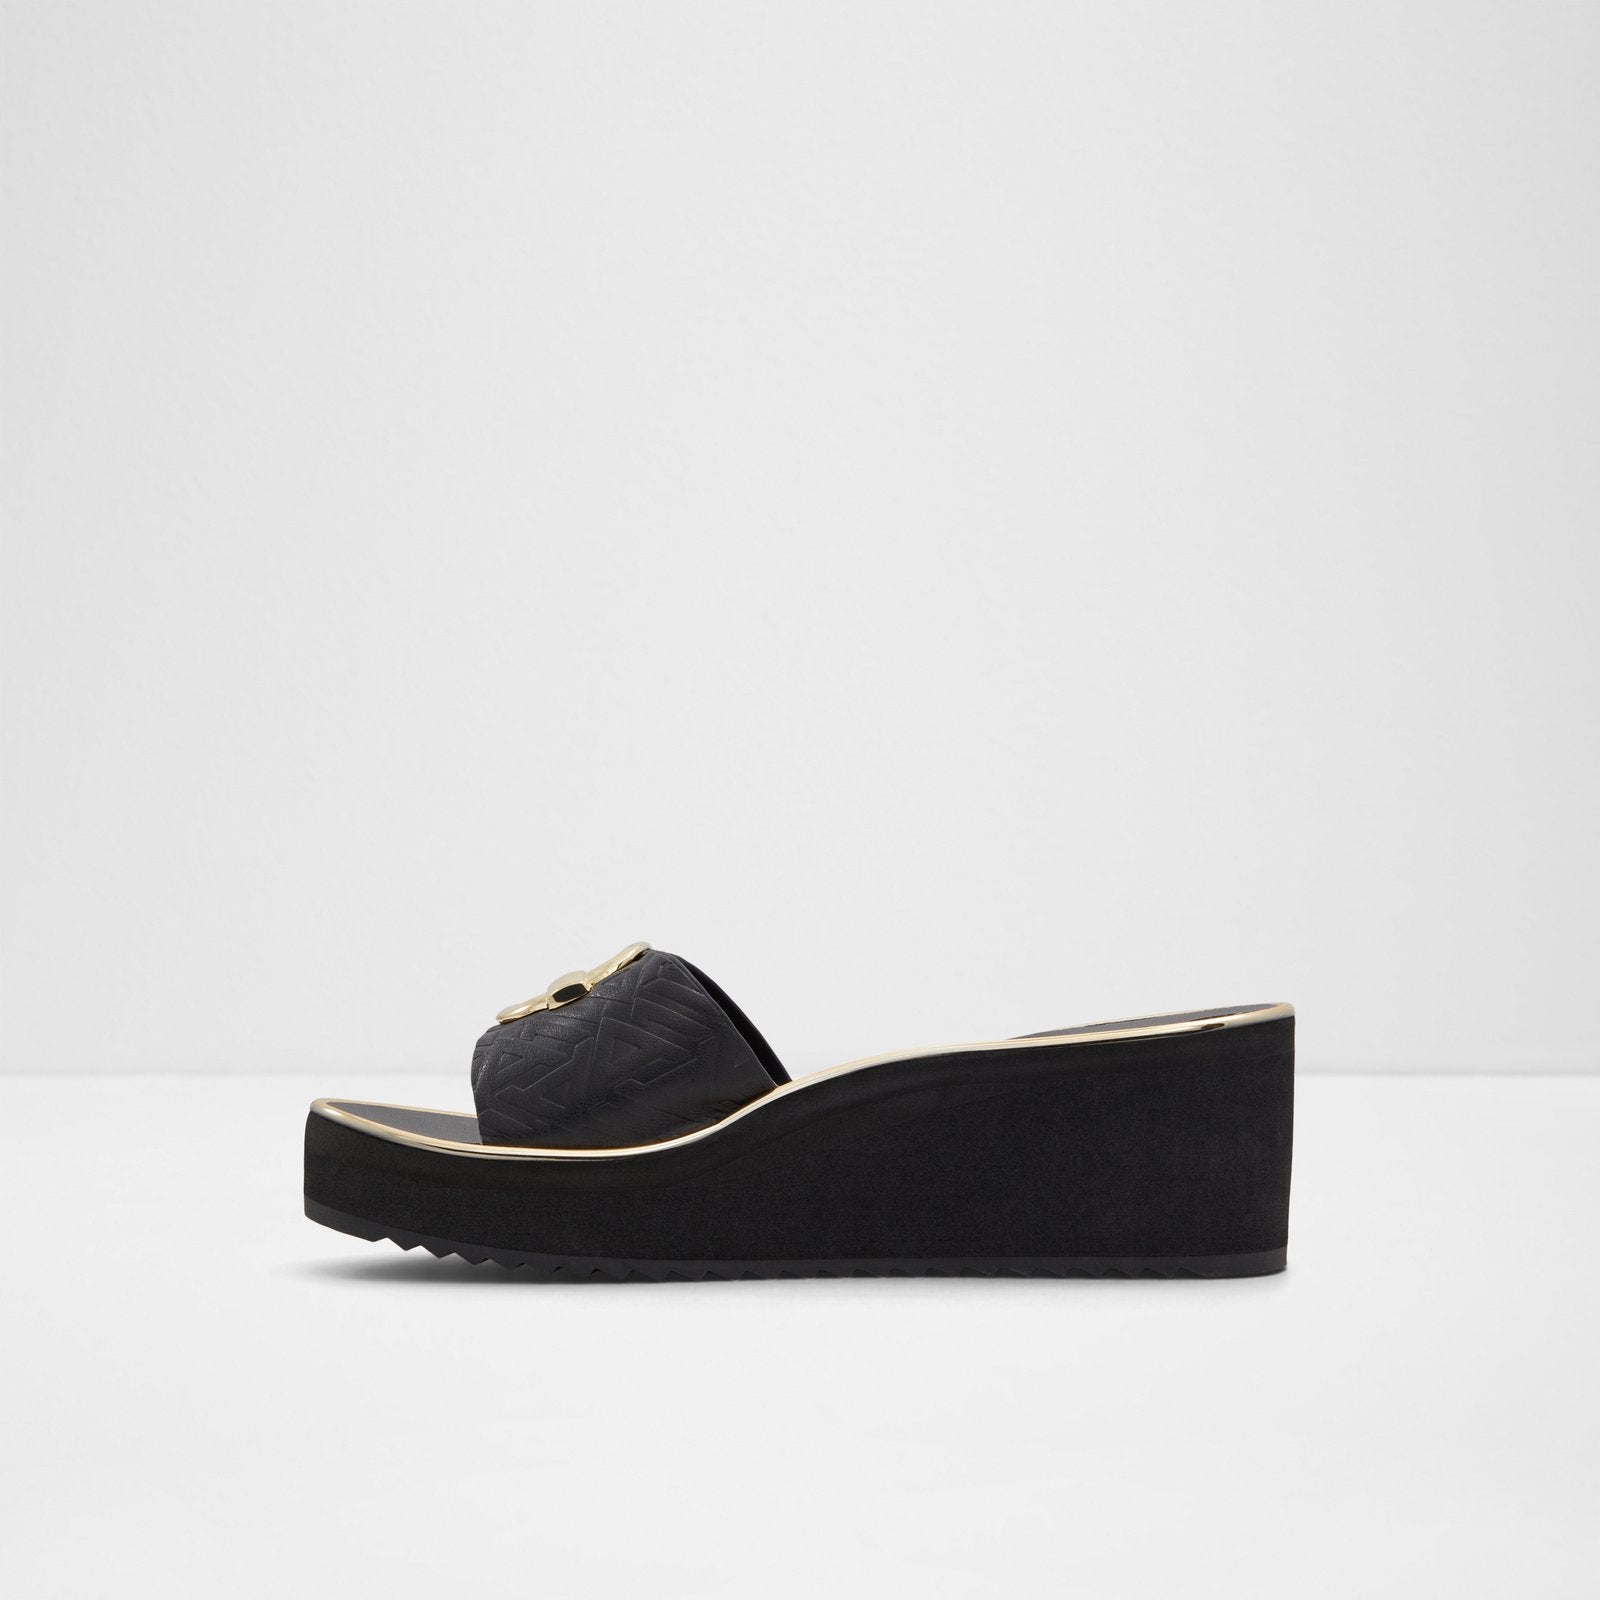 Onayllan / Beach Sandals Women Shoes - Black - ALDO KSA